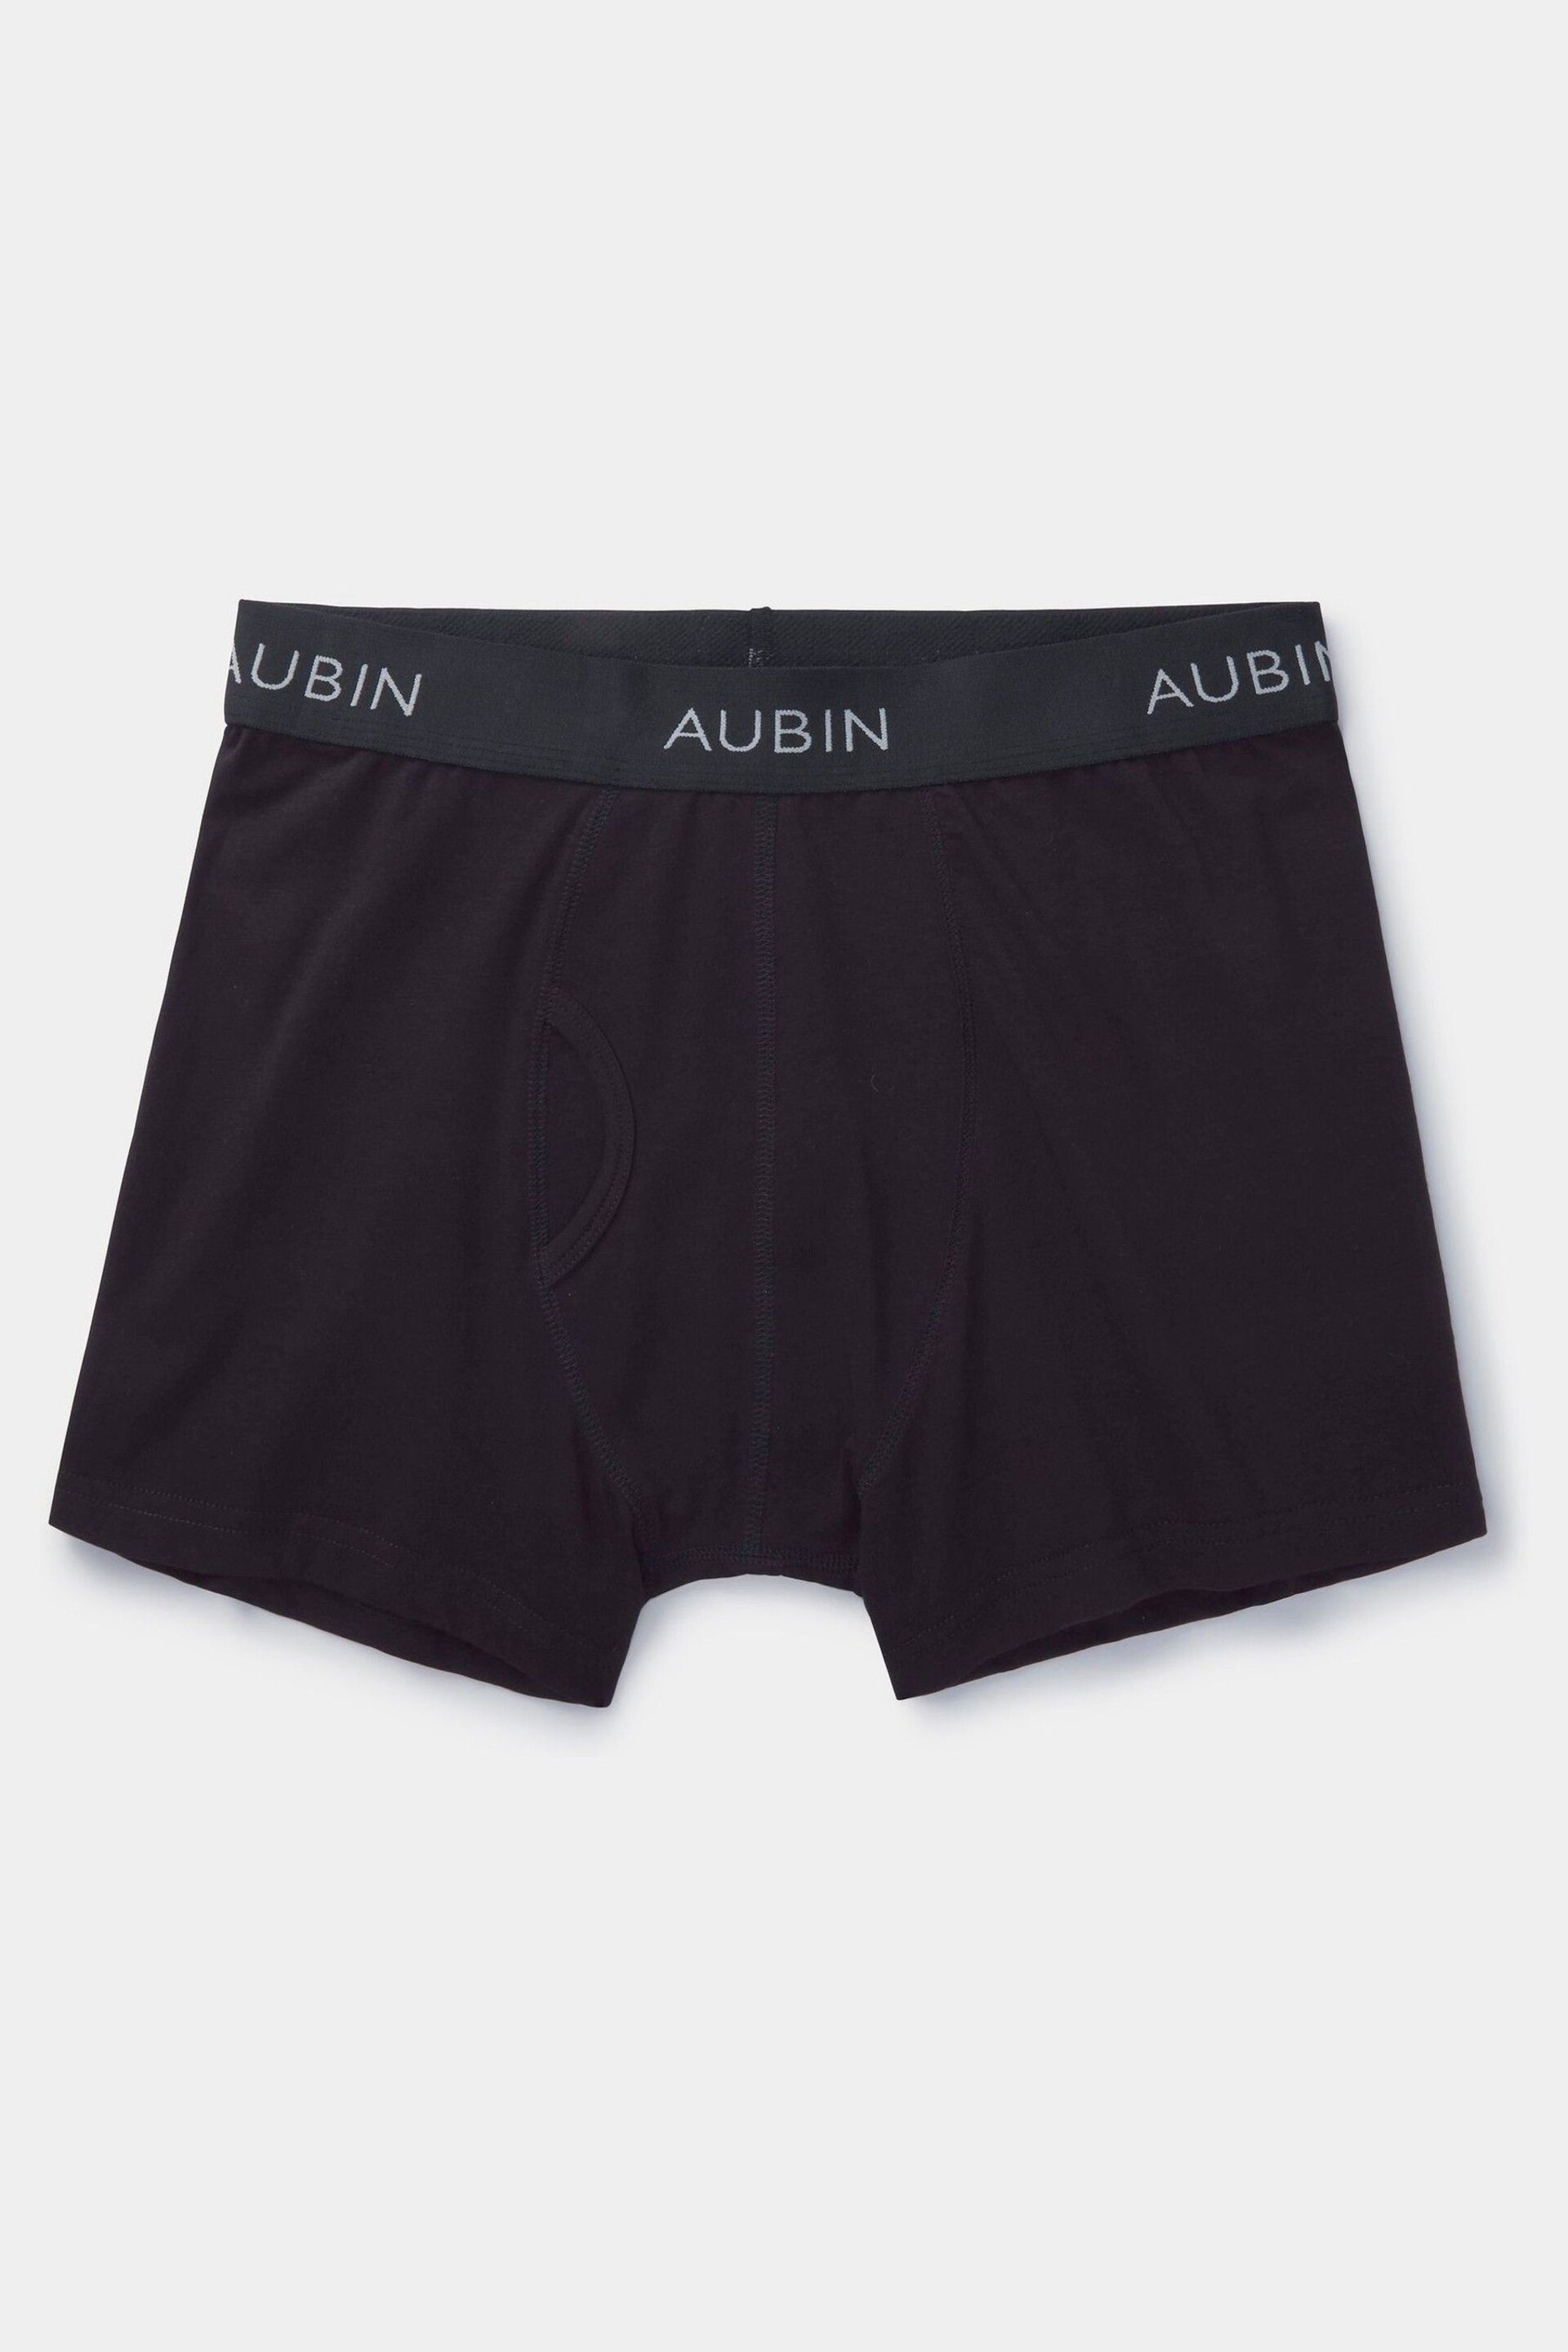 Aubin Hellston Boxer Shorts 3 Pack - Image 2 of 6